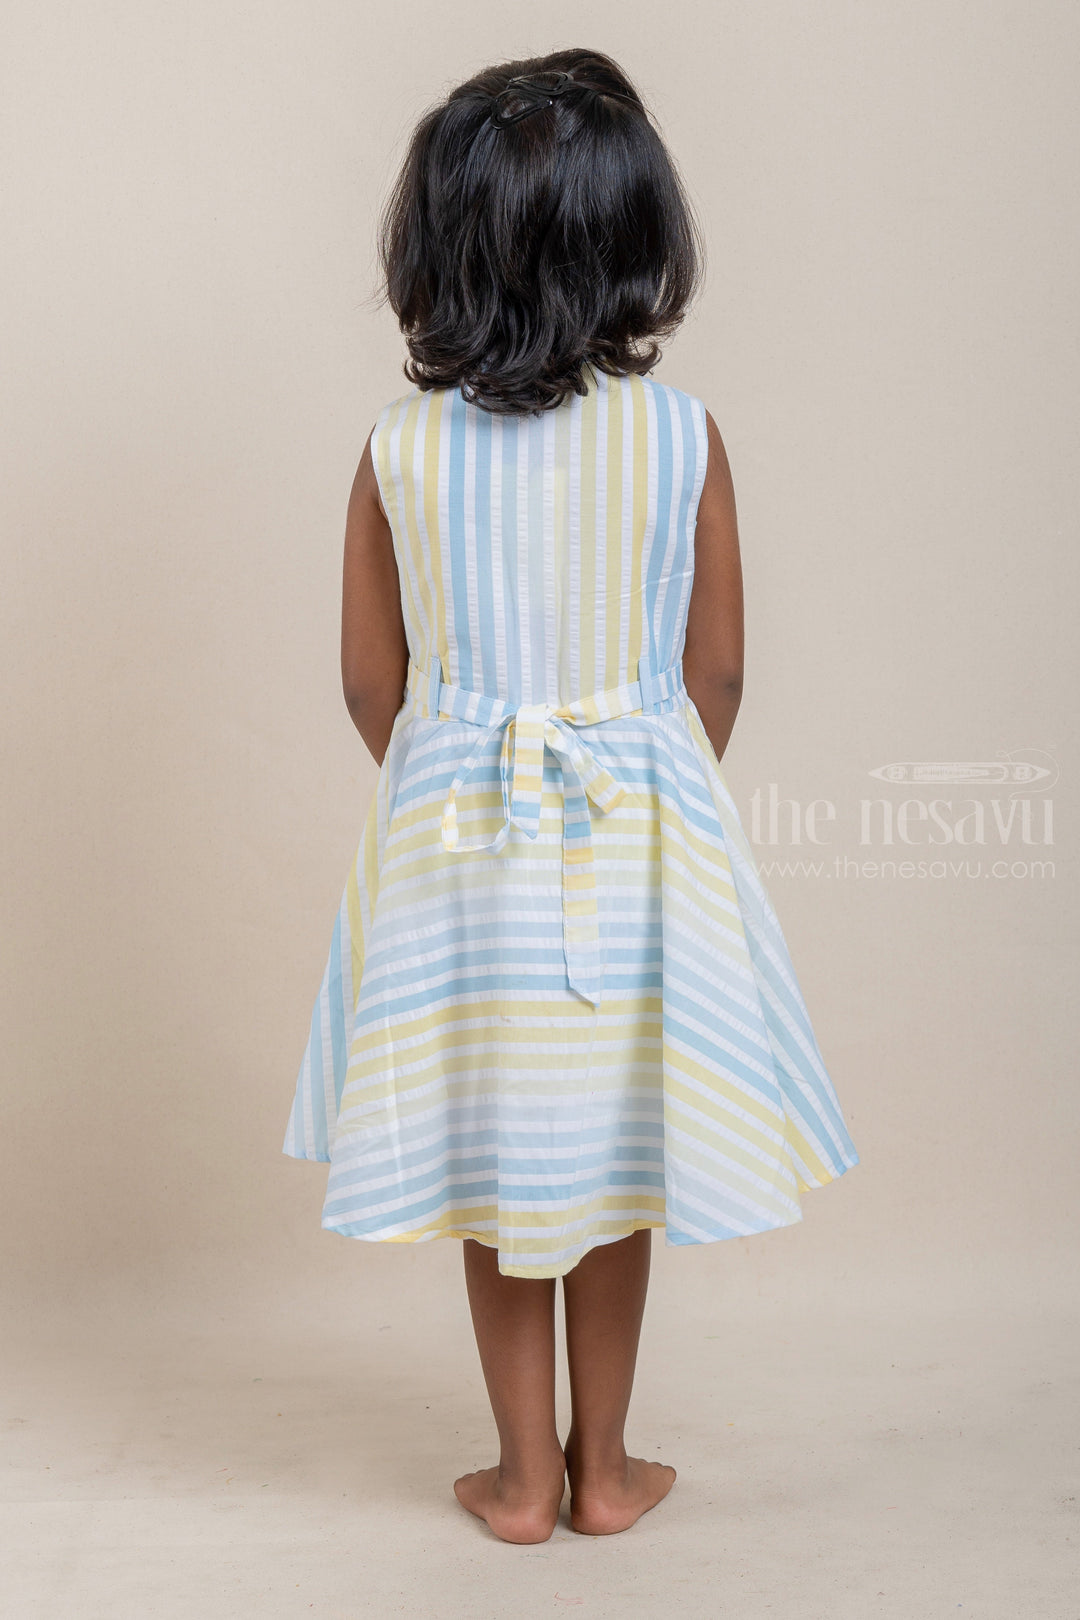 The Nesavu Frocks & Dresses Striped Pattern Blue and Yellow Cotton Frock for Girls psr silks Nesavu